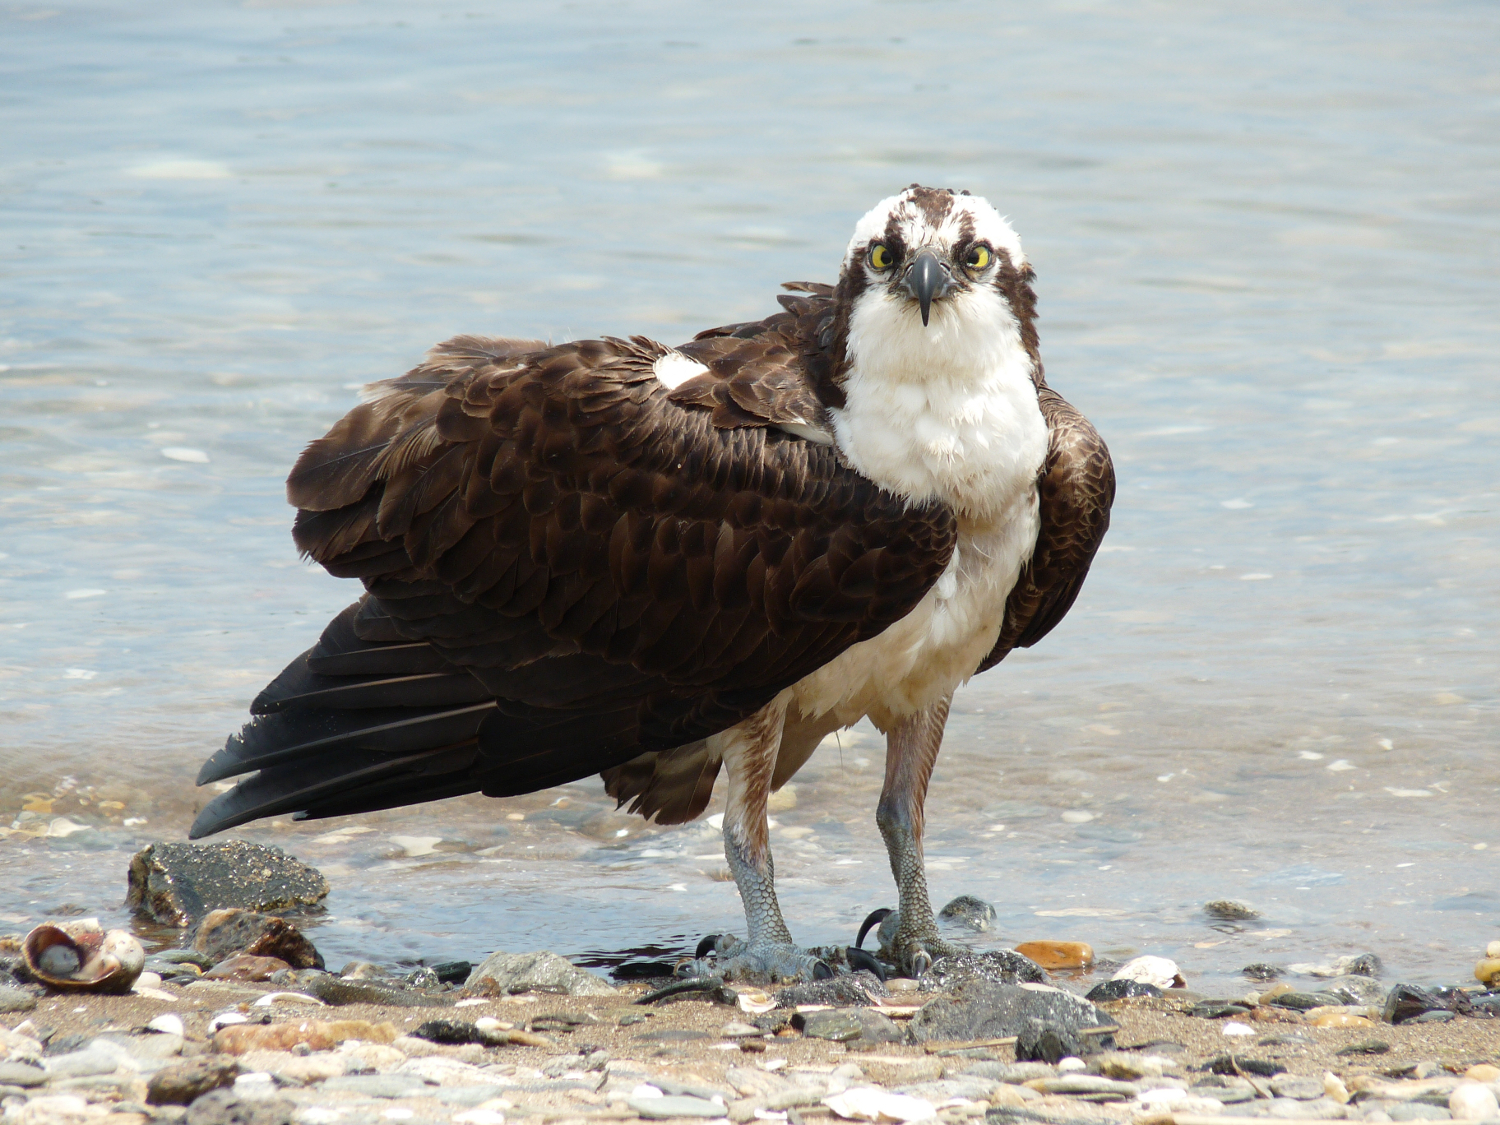 Ospreys (Fish Hawks) are Nesting Now